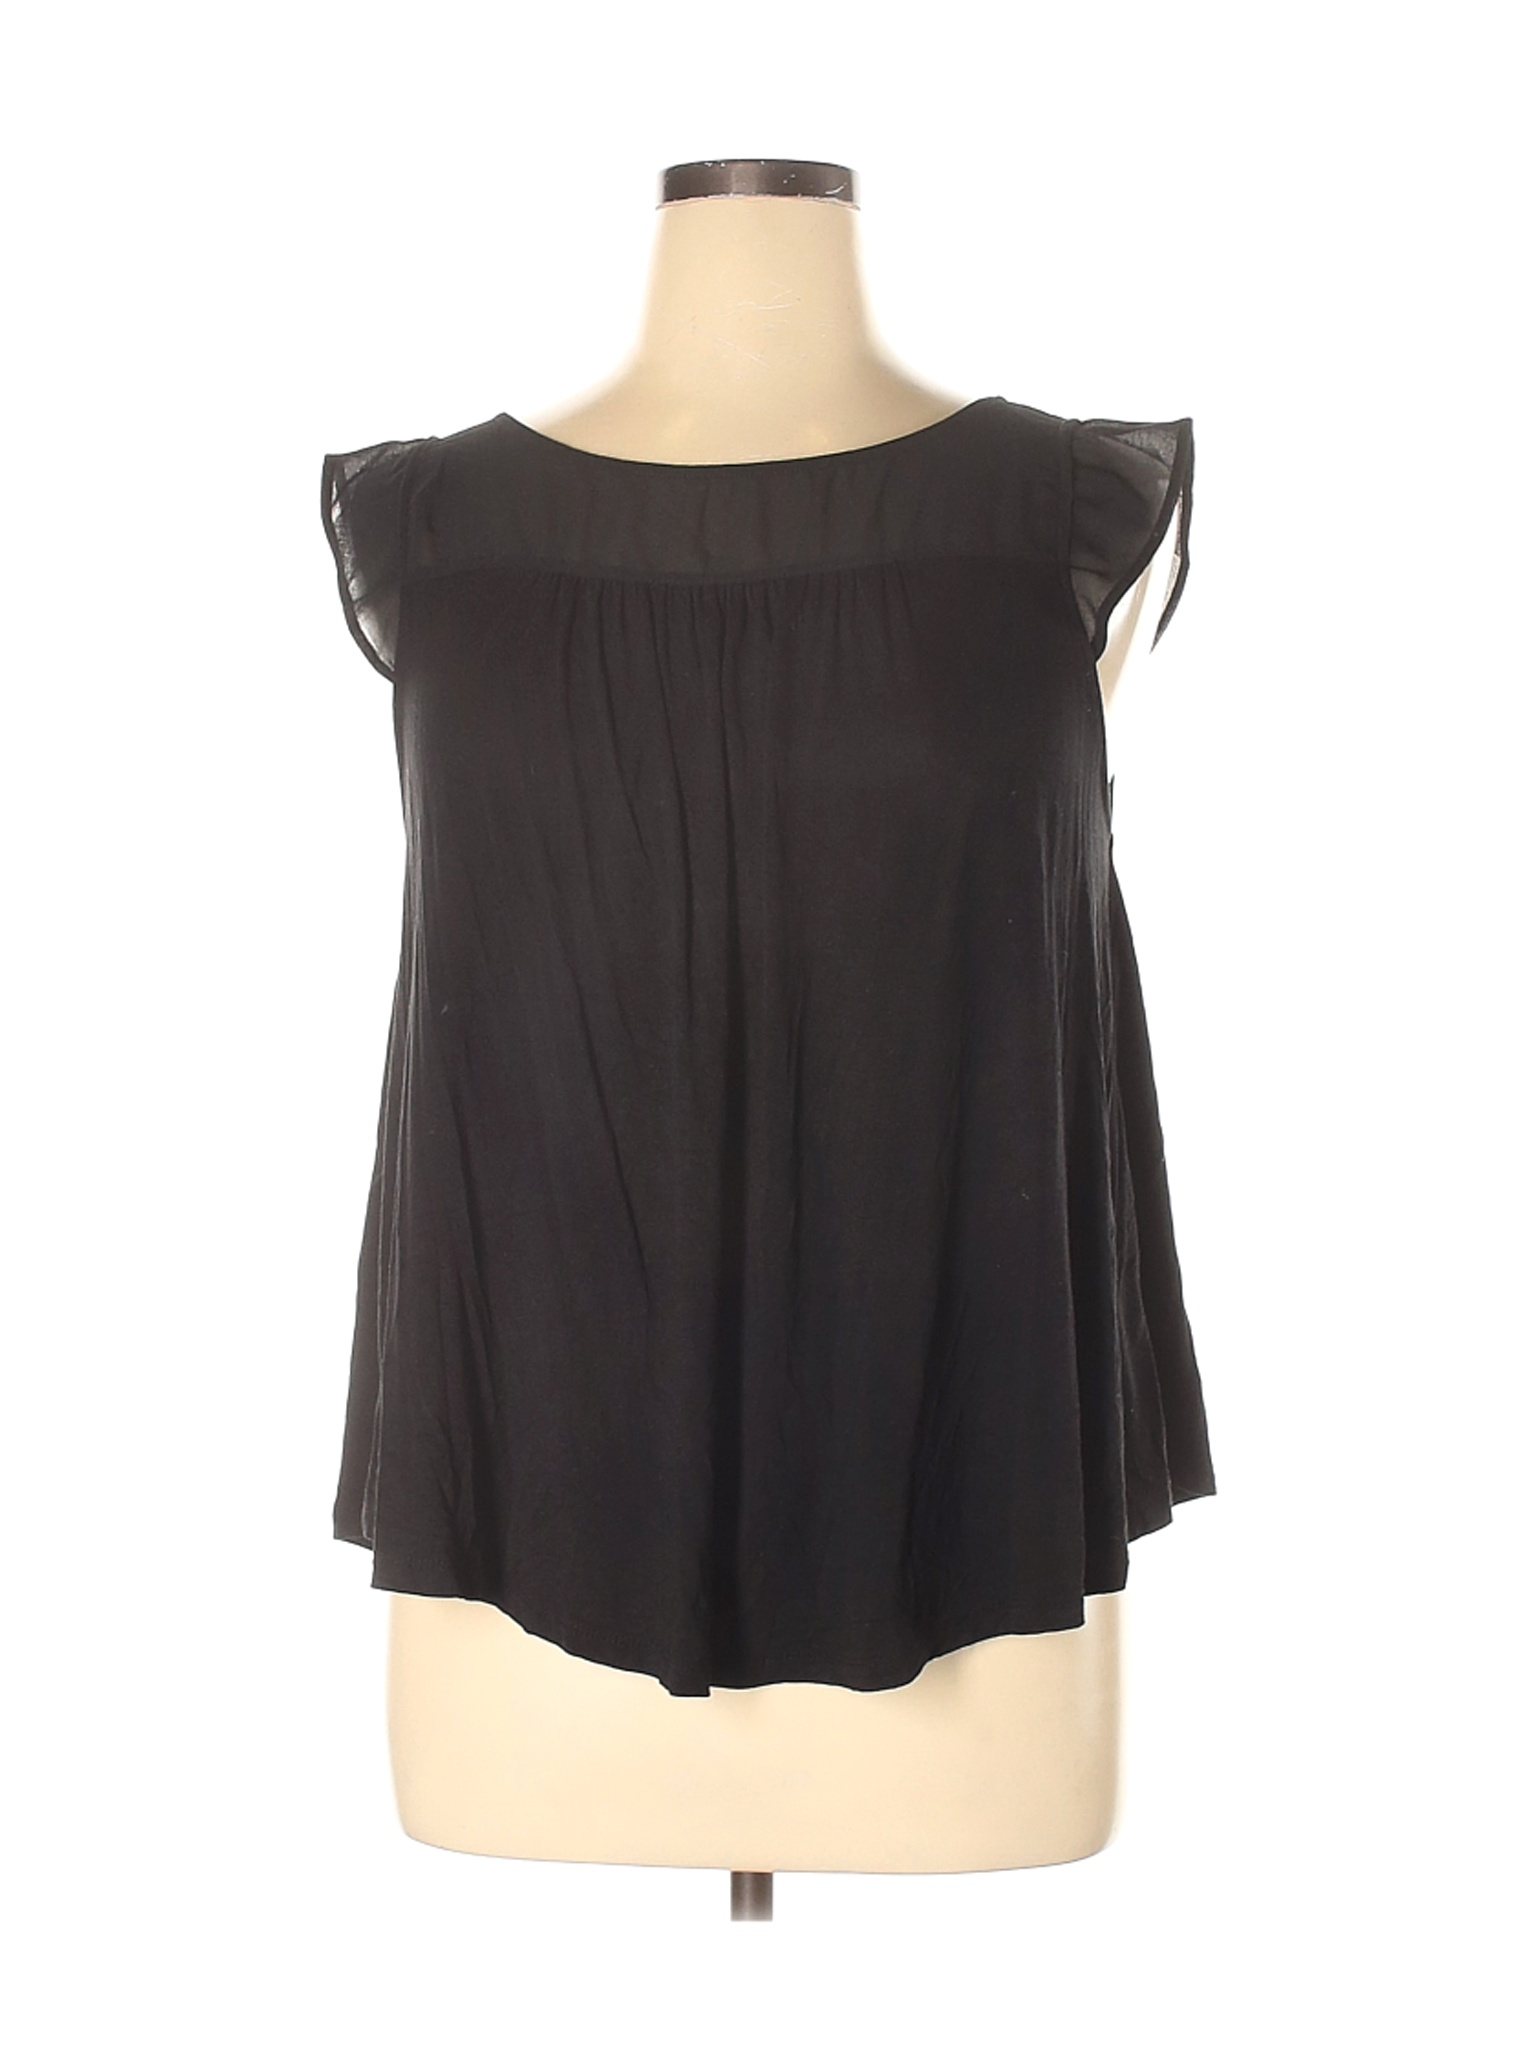 Merona Women Black Sleeveless Top XL | eBay